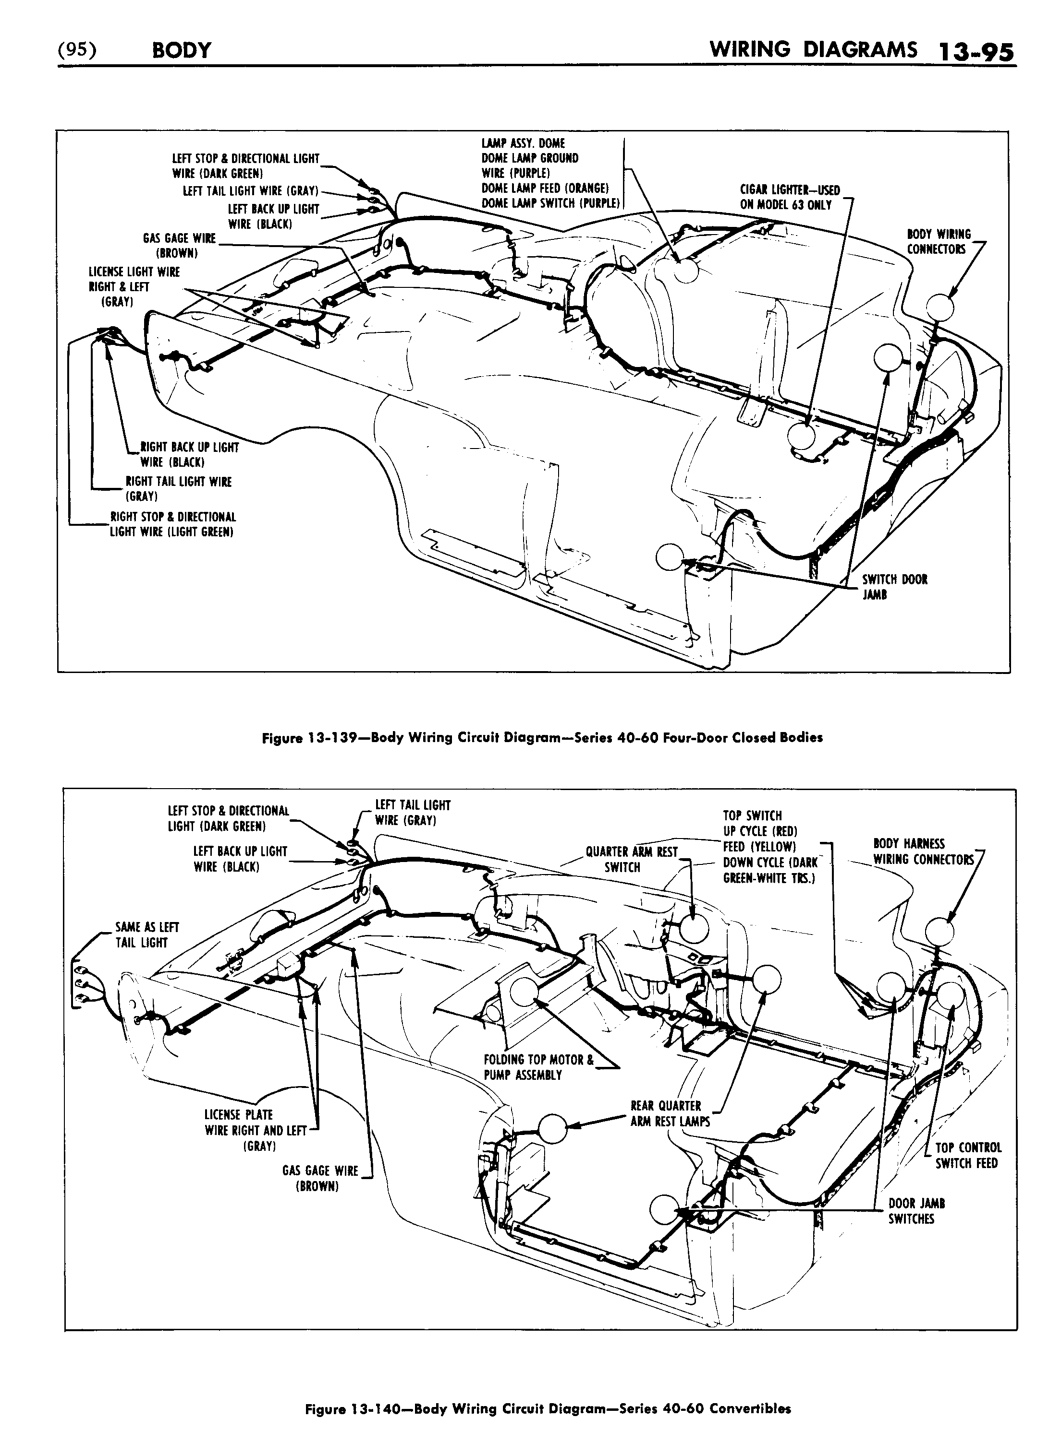 n_1957 Buick Body Service Manual-097-097.jpg